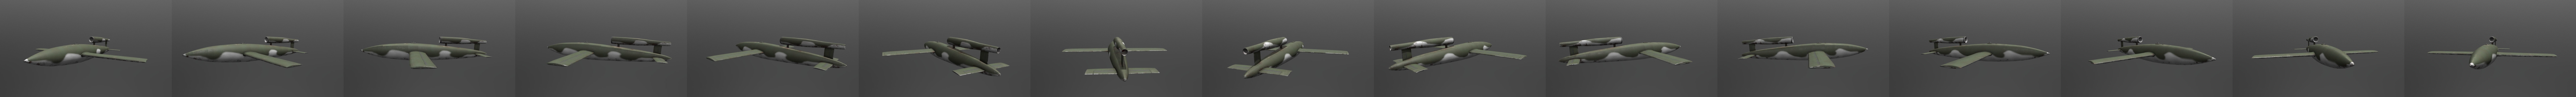 V-1 Flying Bomb - Download Free 3D model by Peter Primini